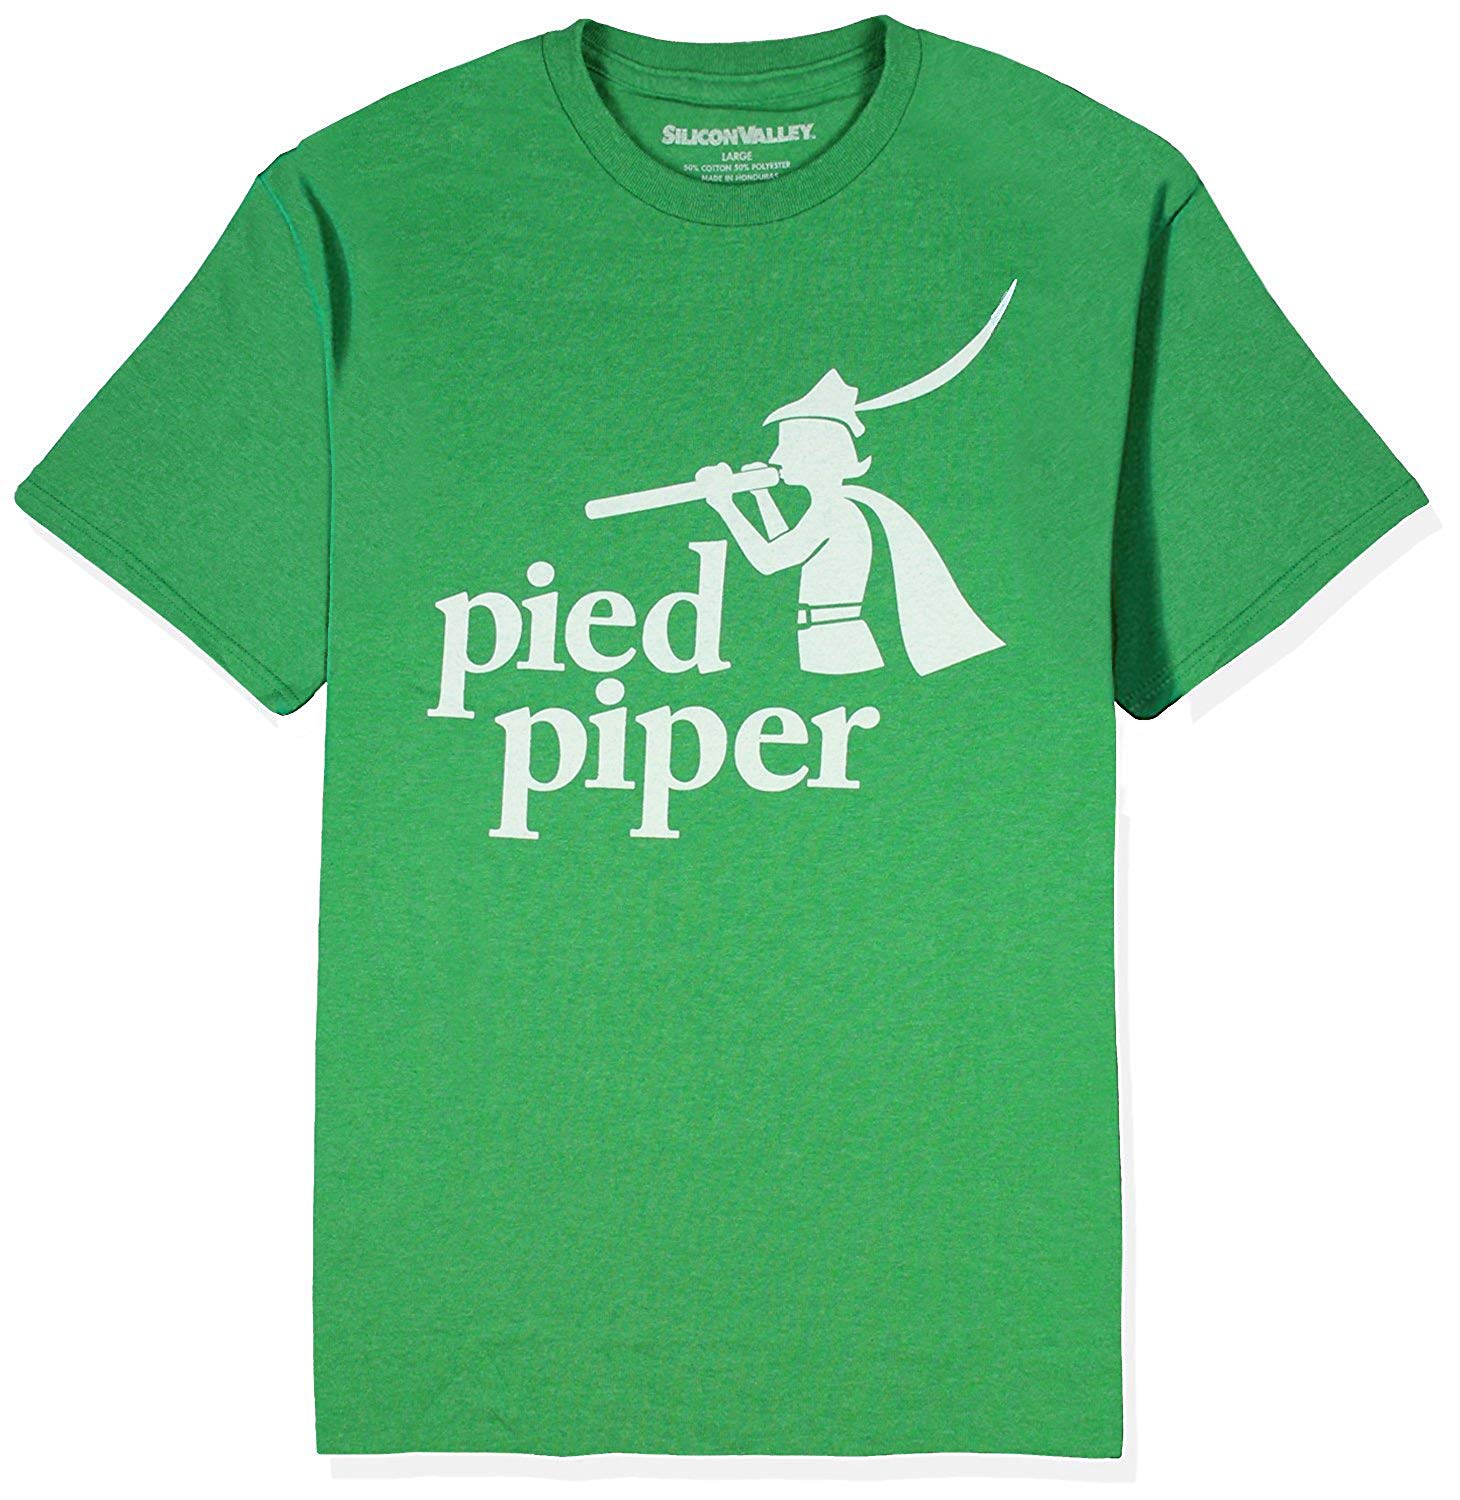 Piper Logo - Amazon.com: Silicon Valley Men's Original Pied Piper Logo T-Shirt ...